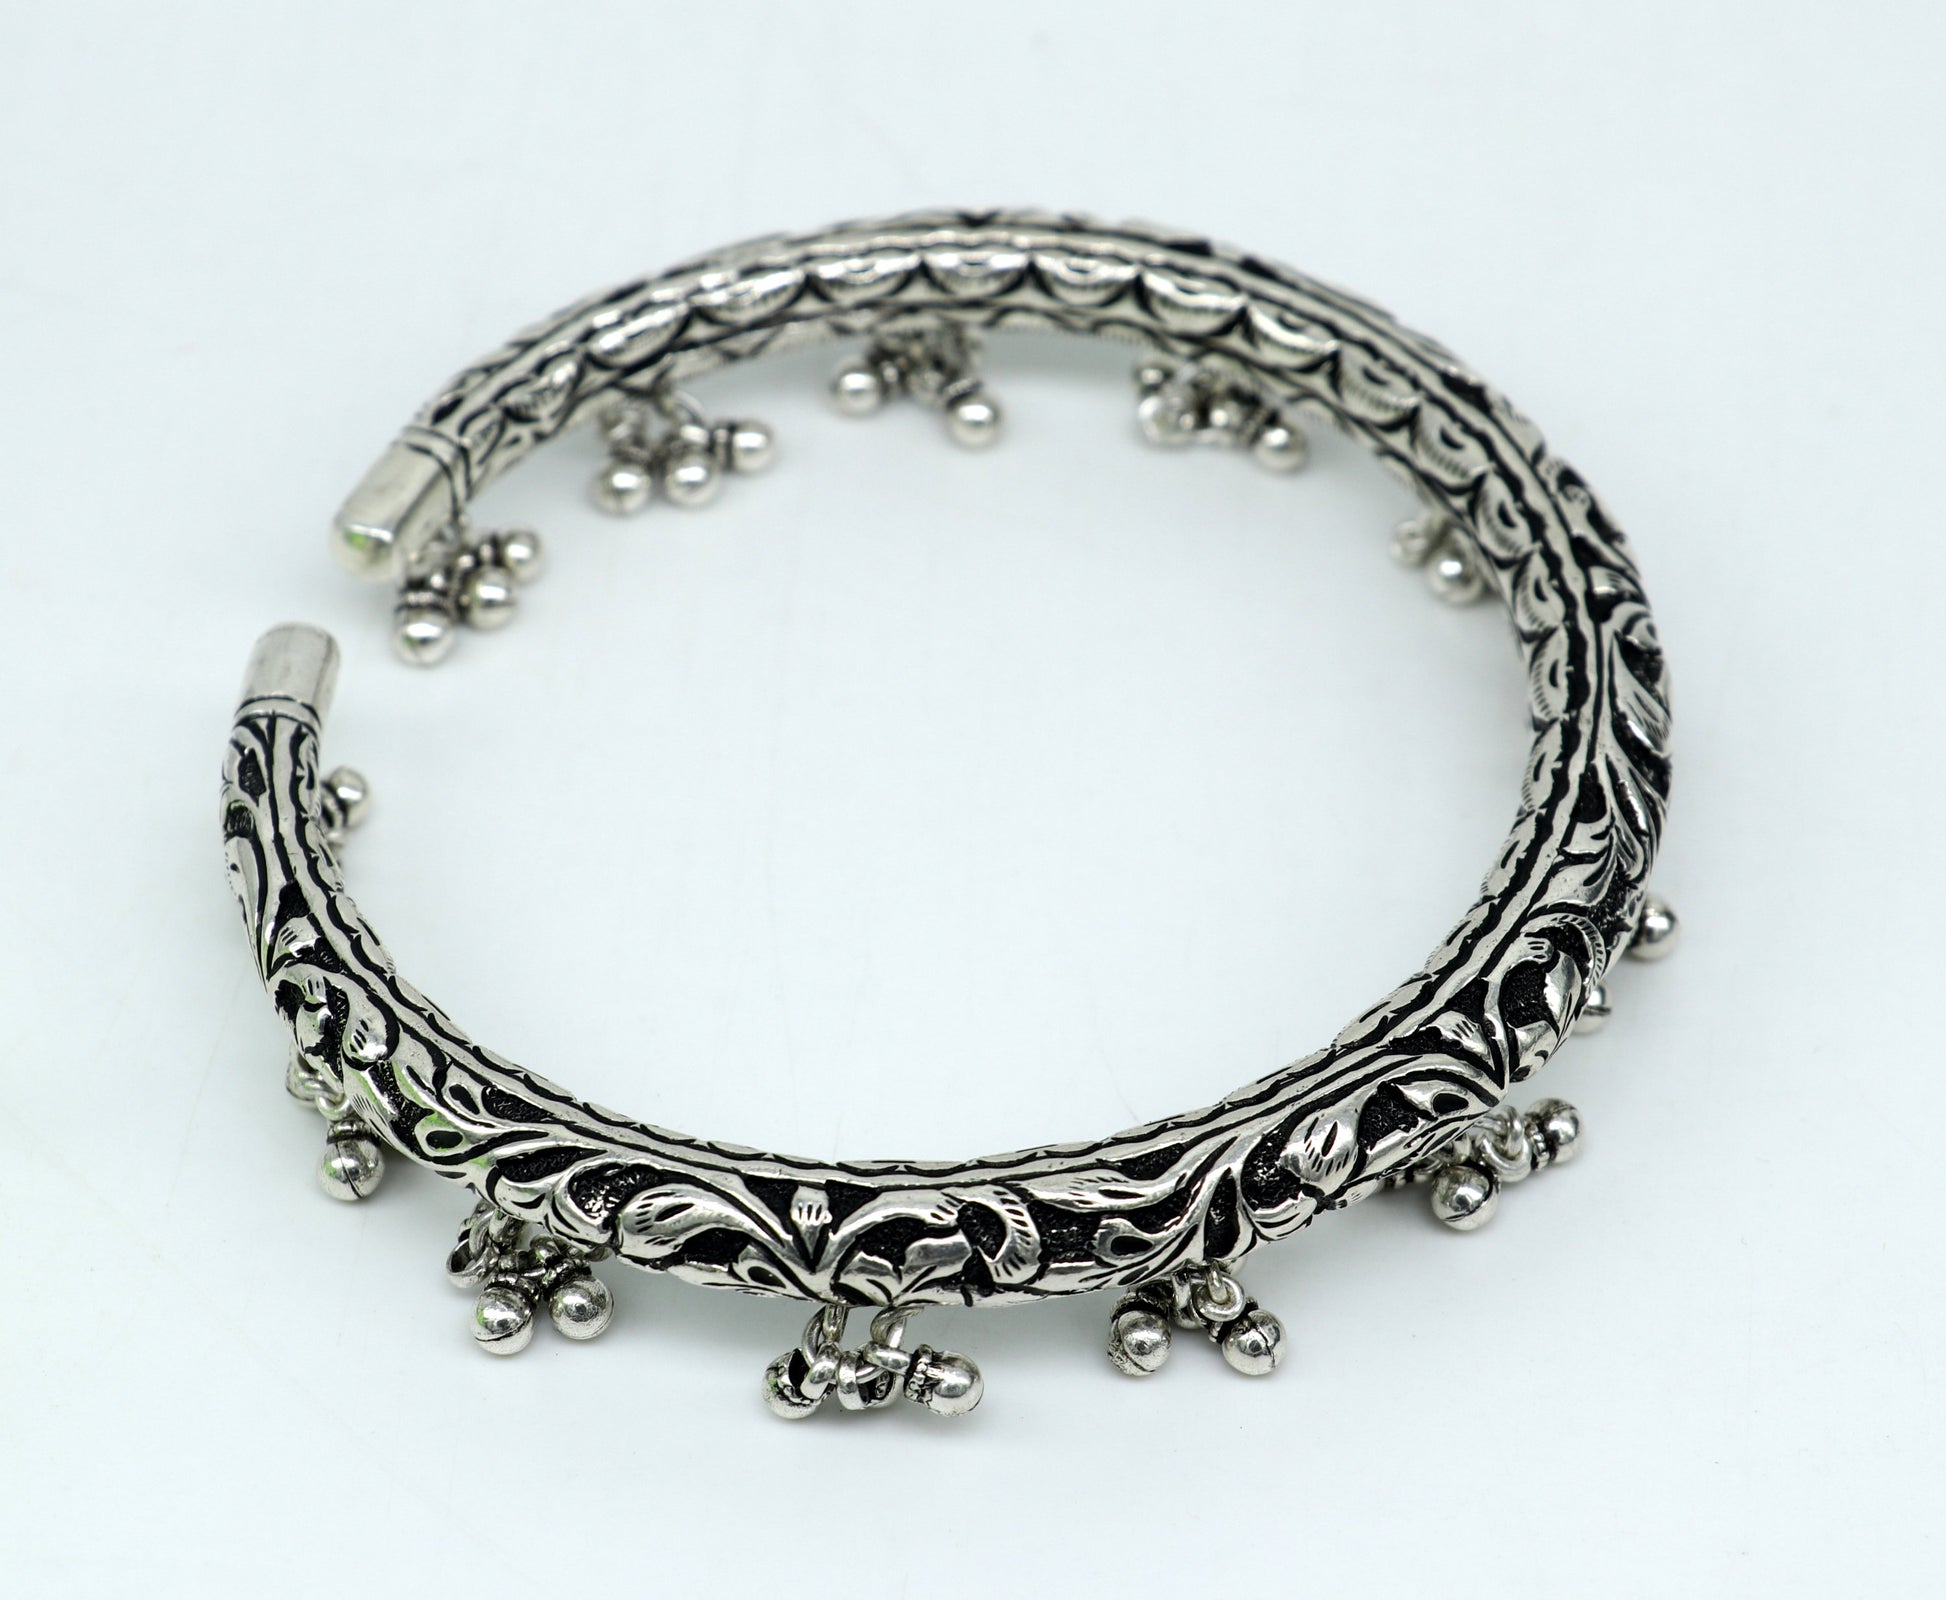 925 pure silver Vintage antique design handmade gorgeous oxidized foot kada ankle bracelet tribal ethnic silver jewelry sak27 - TRIBAL ORNAMENTS